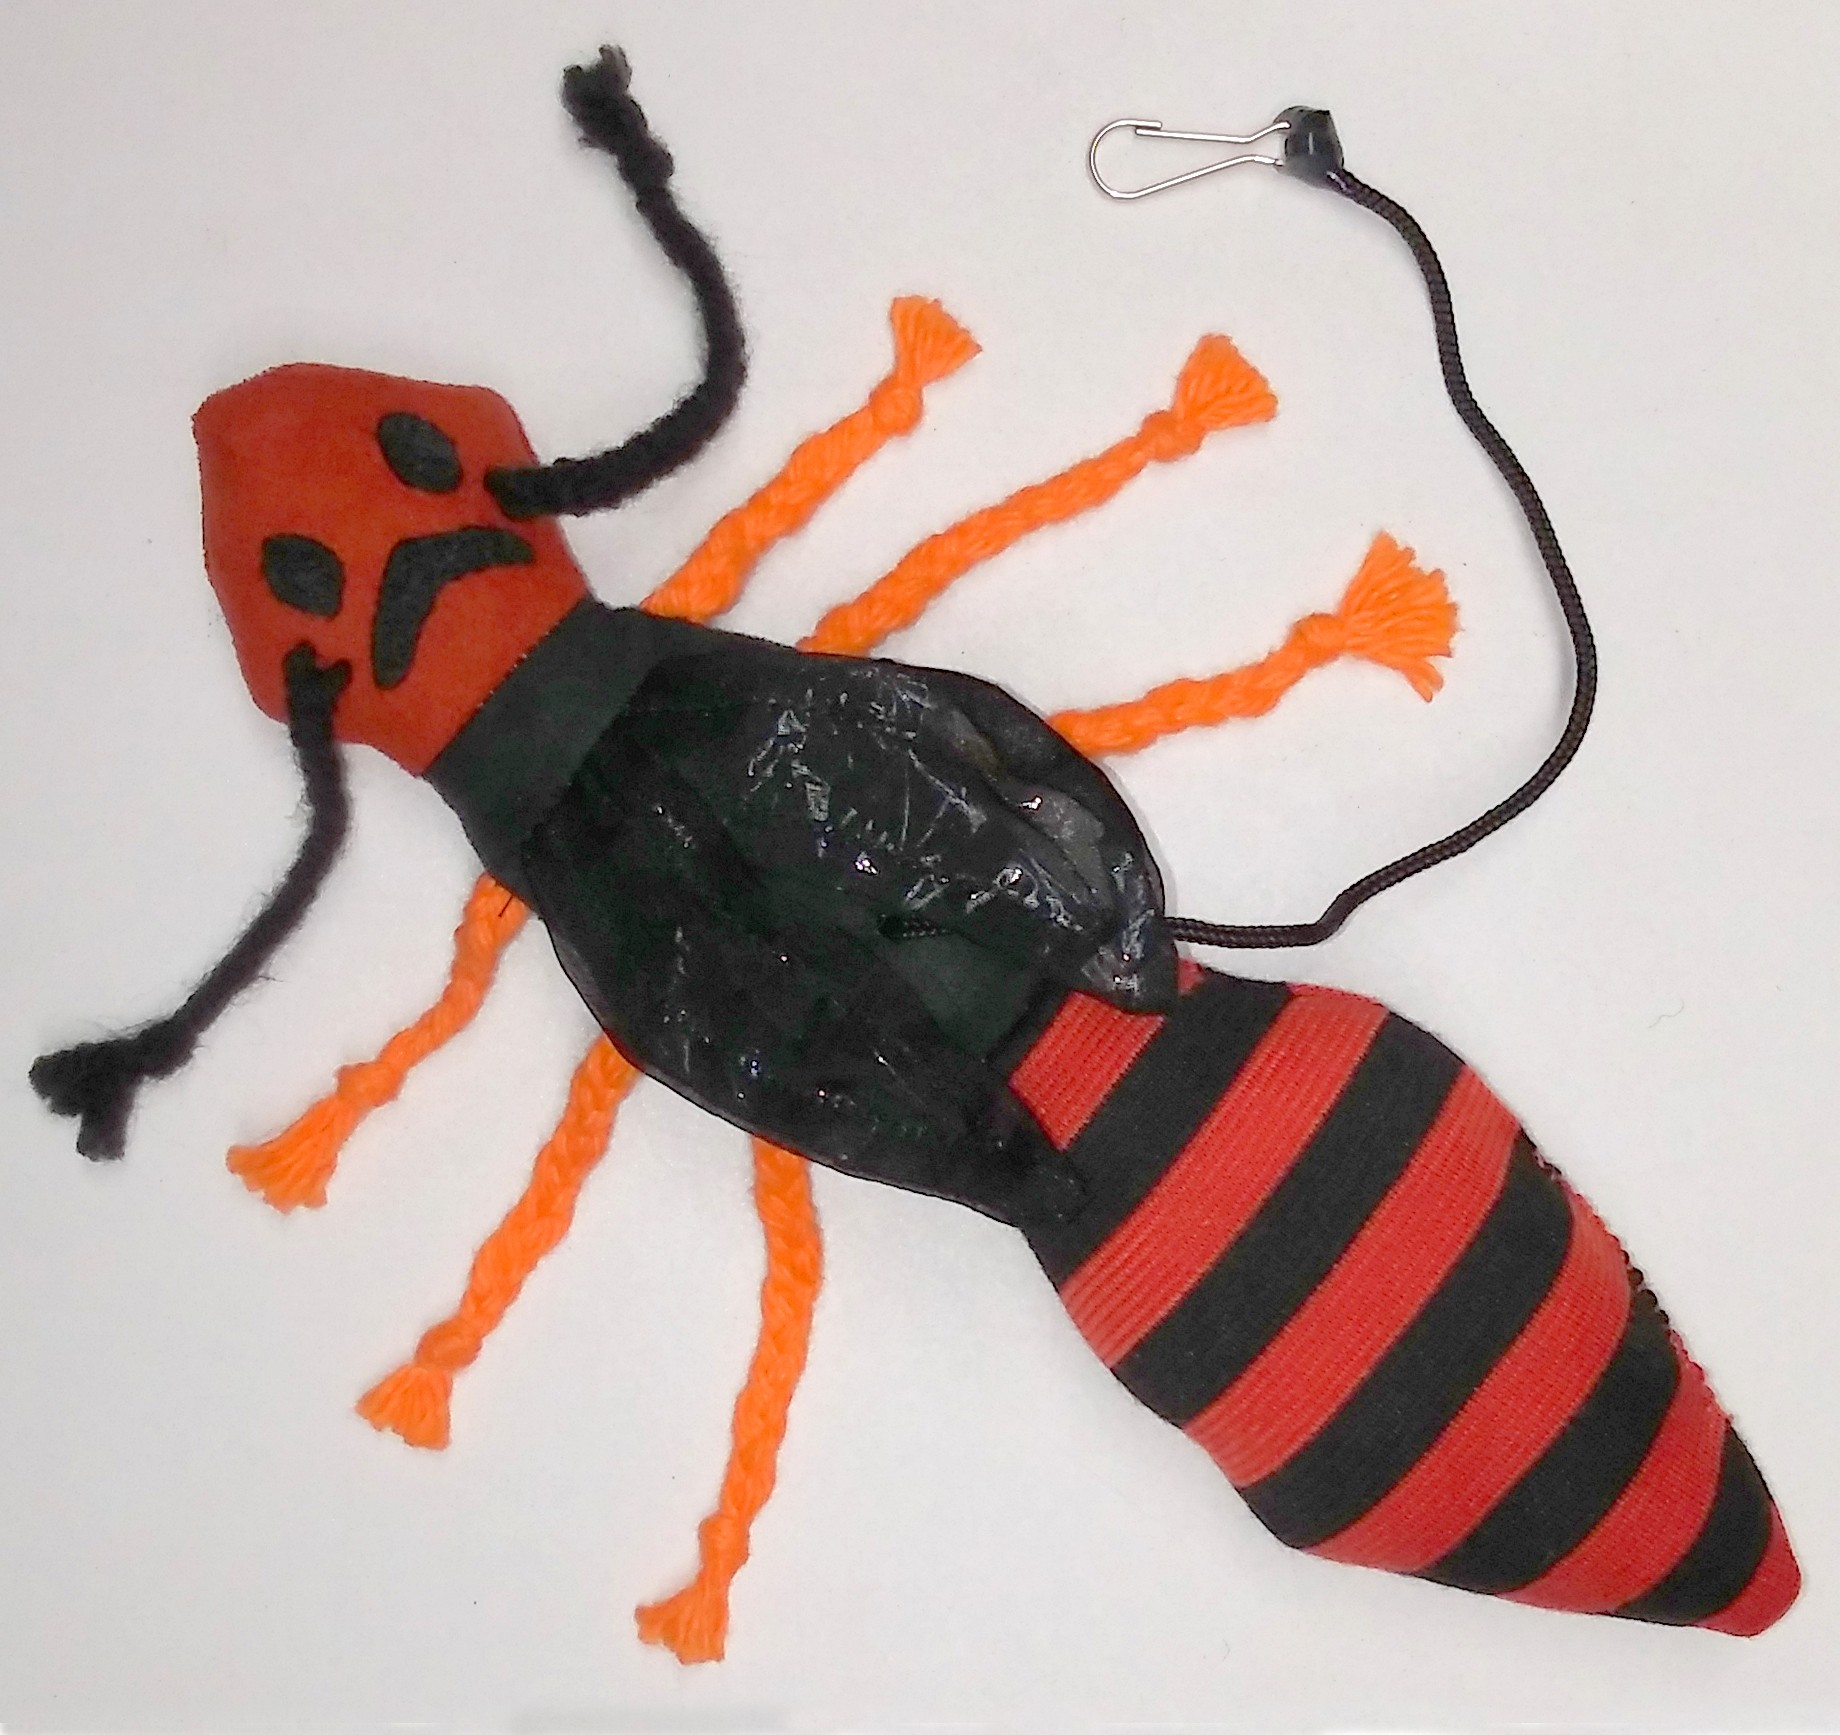 Giant Hornet Catnip Toy